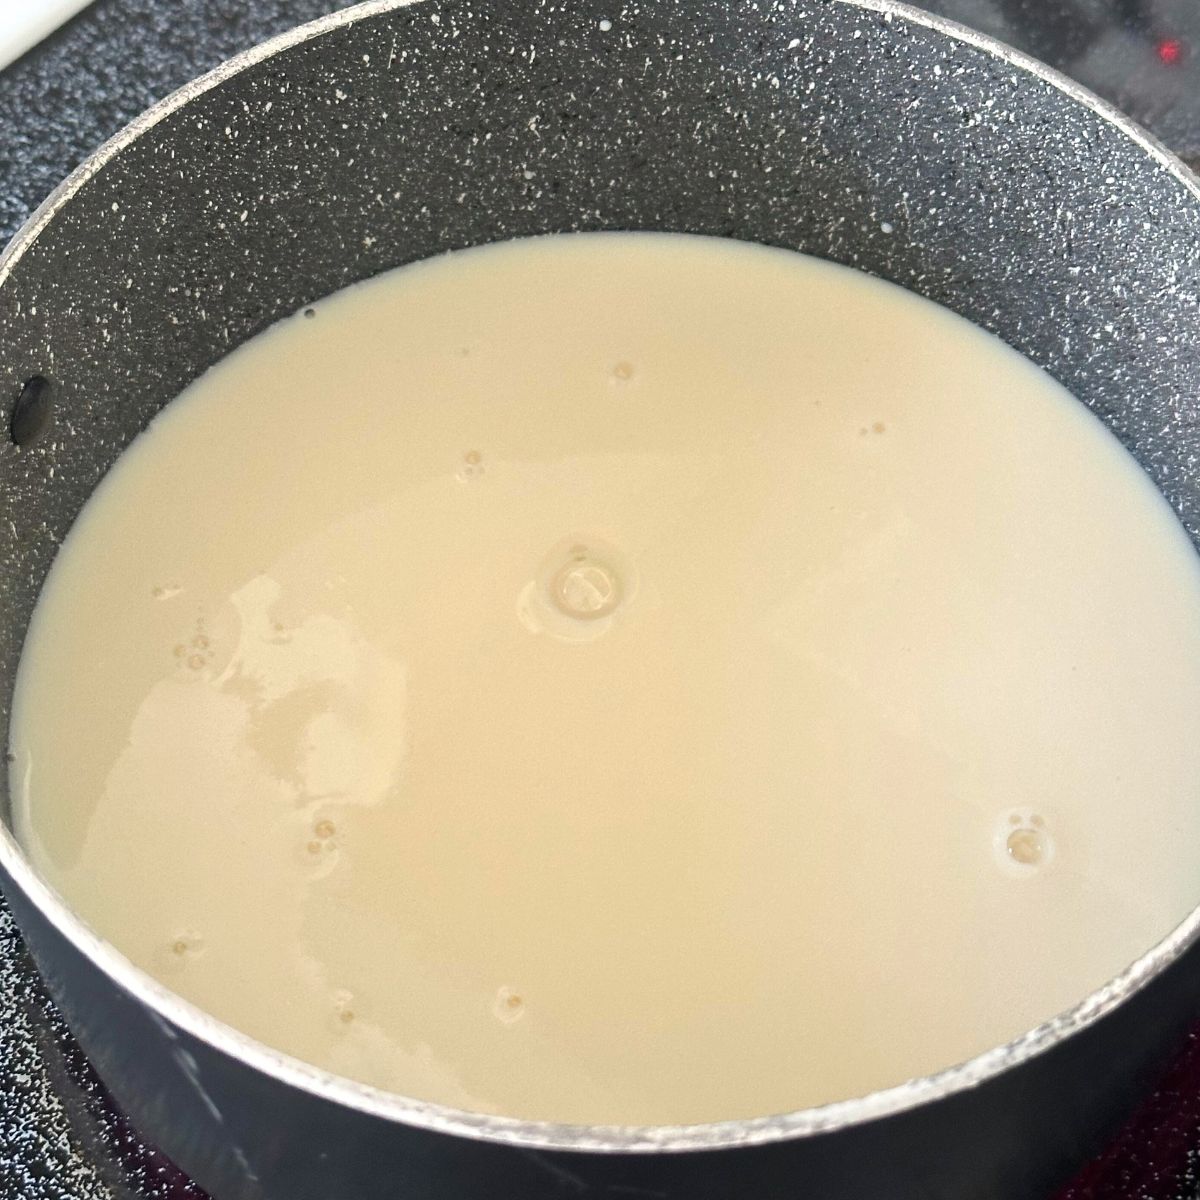 Milk heating up on stove.